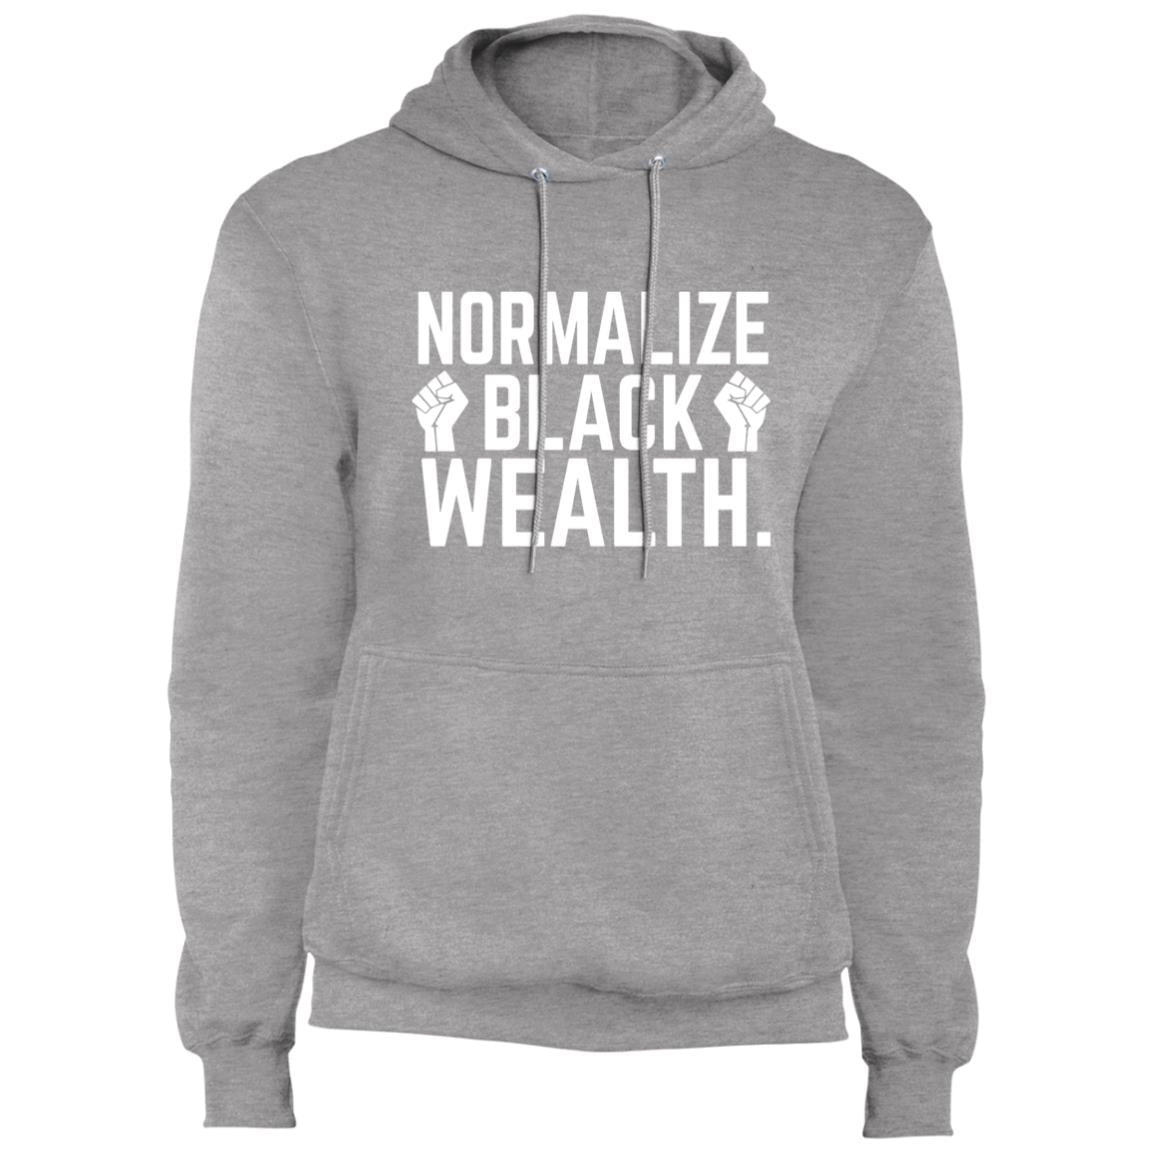 Normalize Black Wealth - Fleece Pullover Hoodie